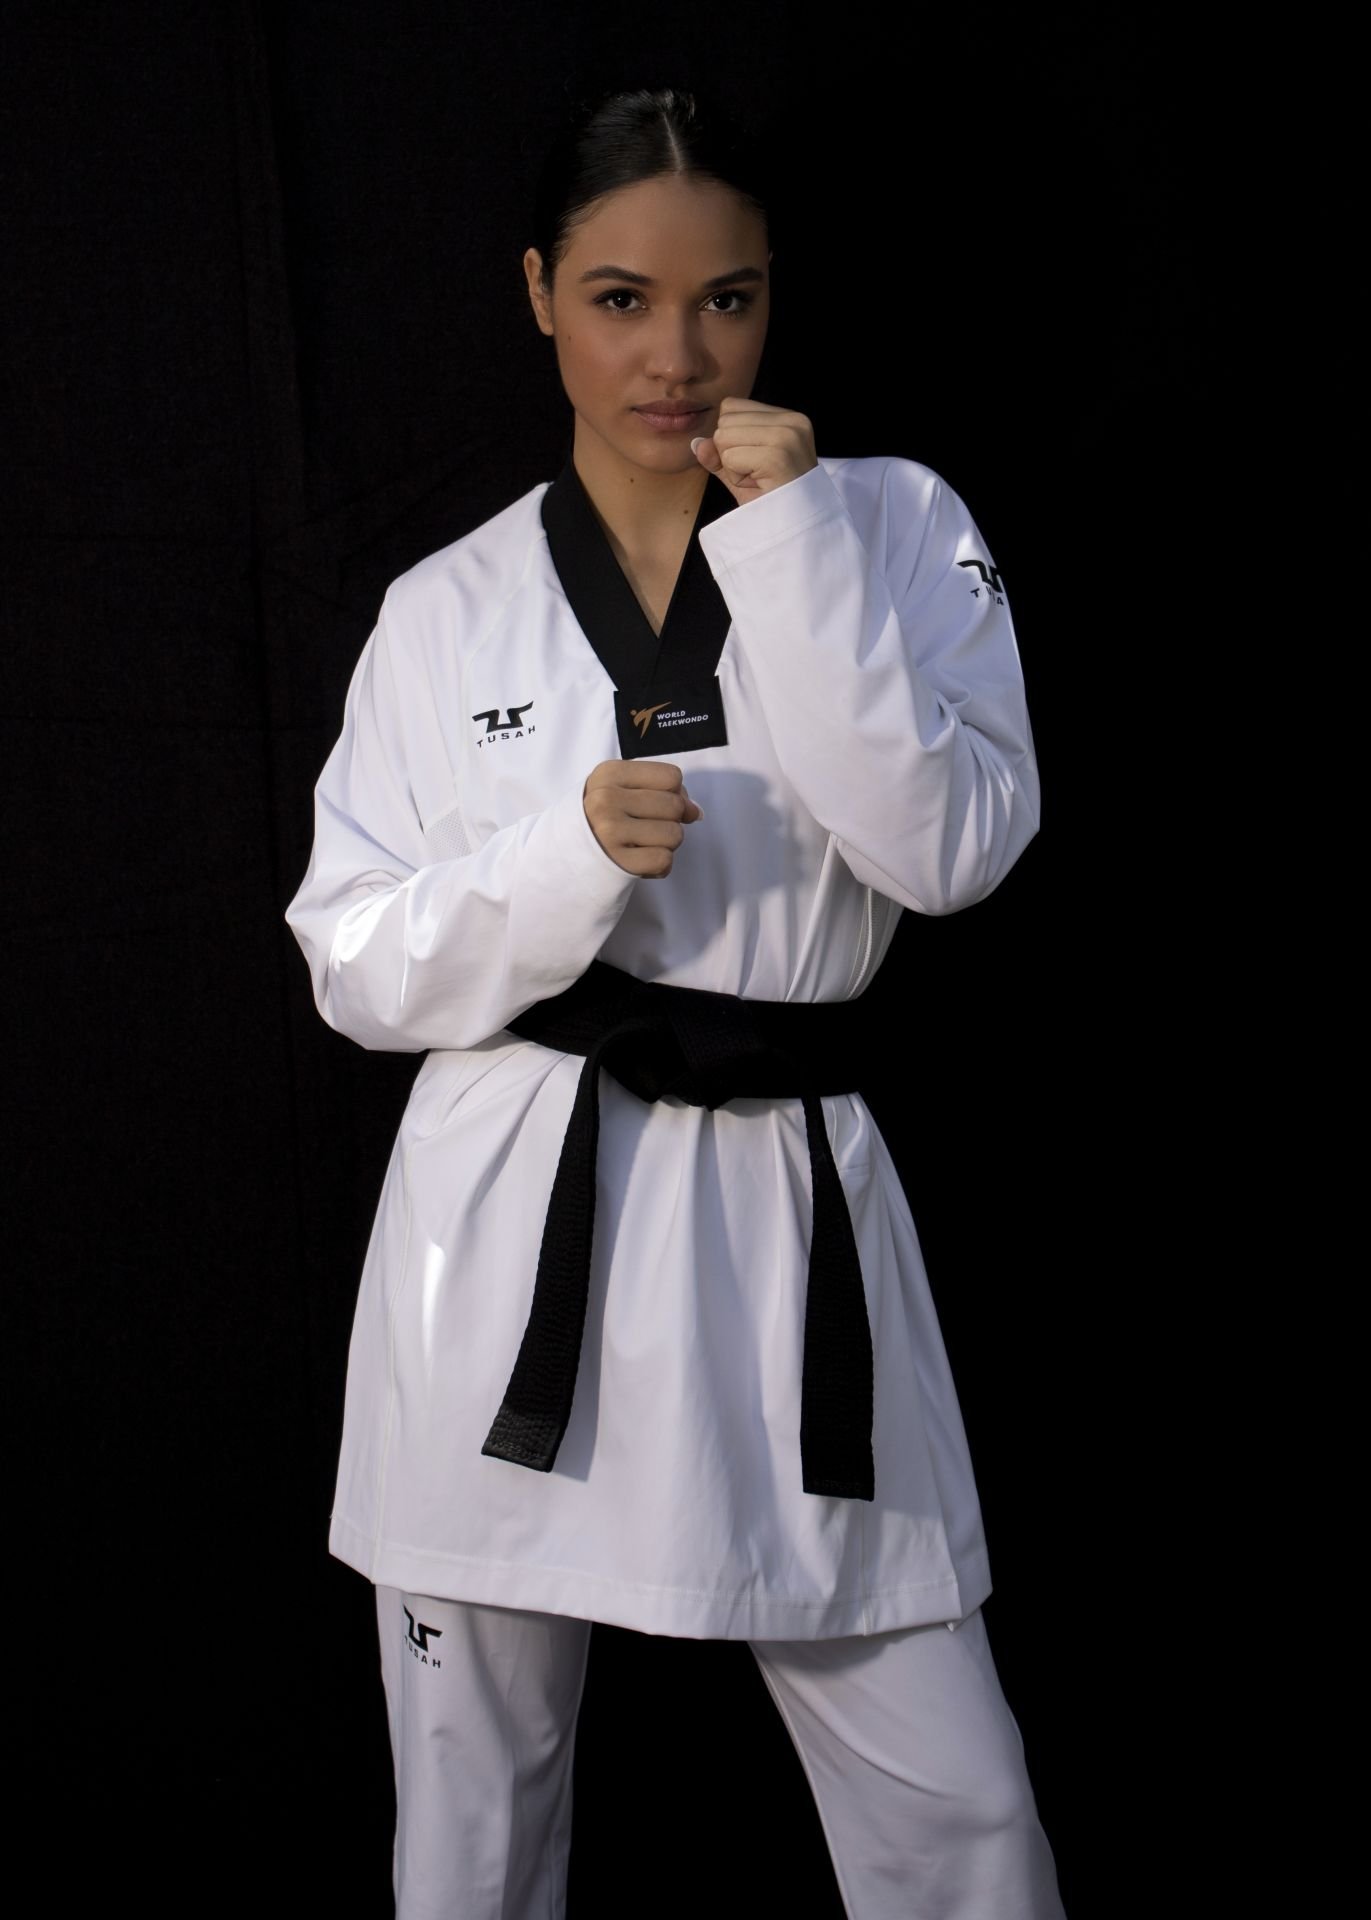 taekwondo uniform called